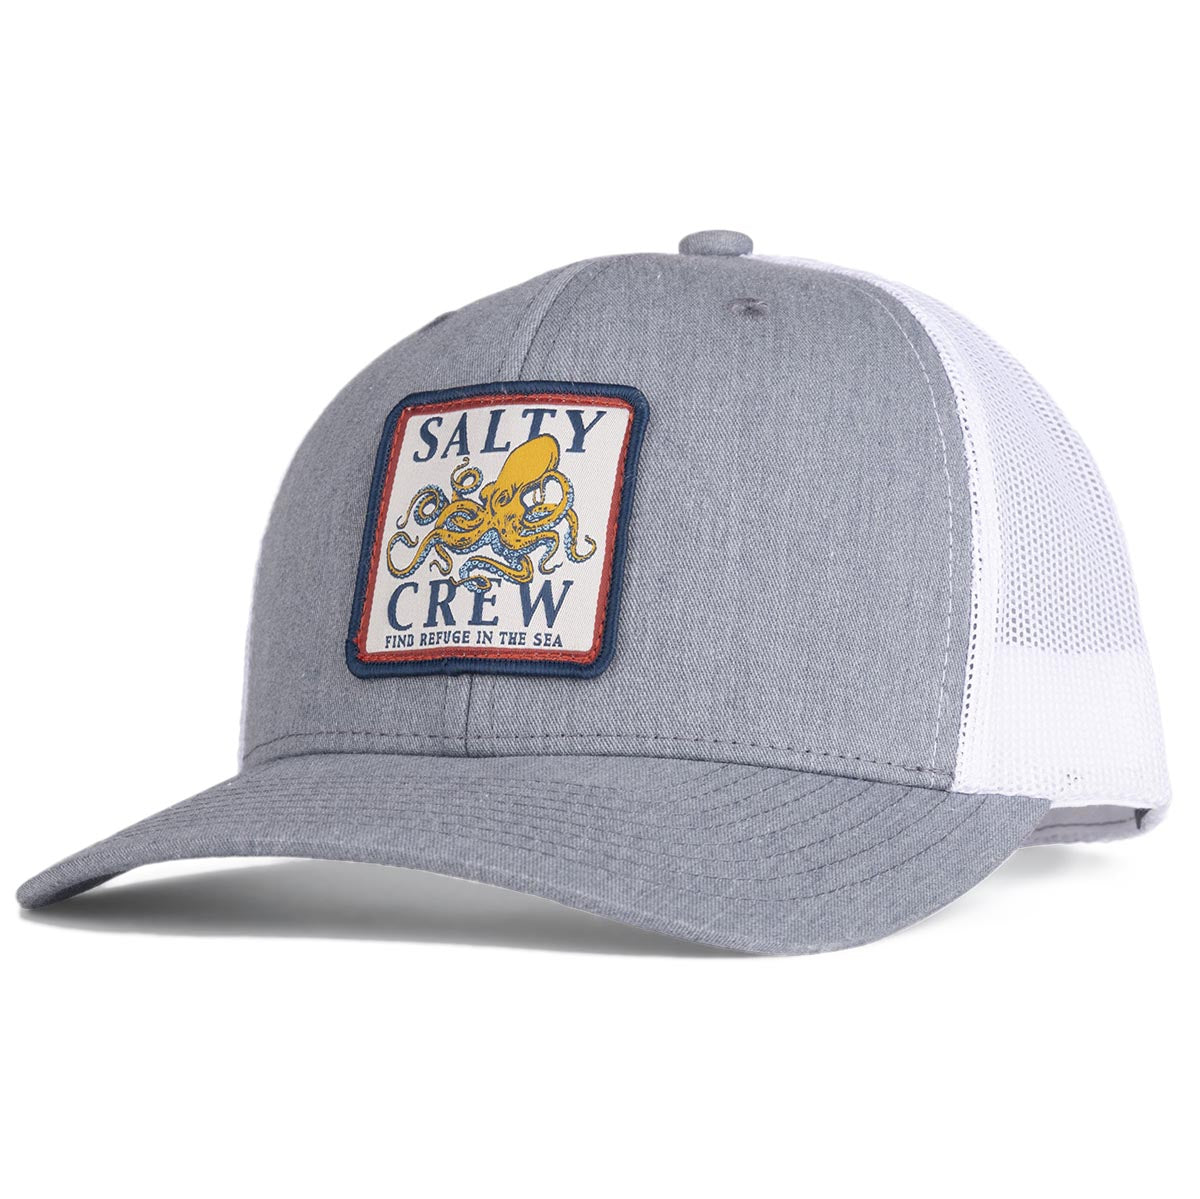 Salty Crew Ink Slinger Retro Trucker Hat - Heather Grey/White image 1